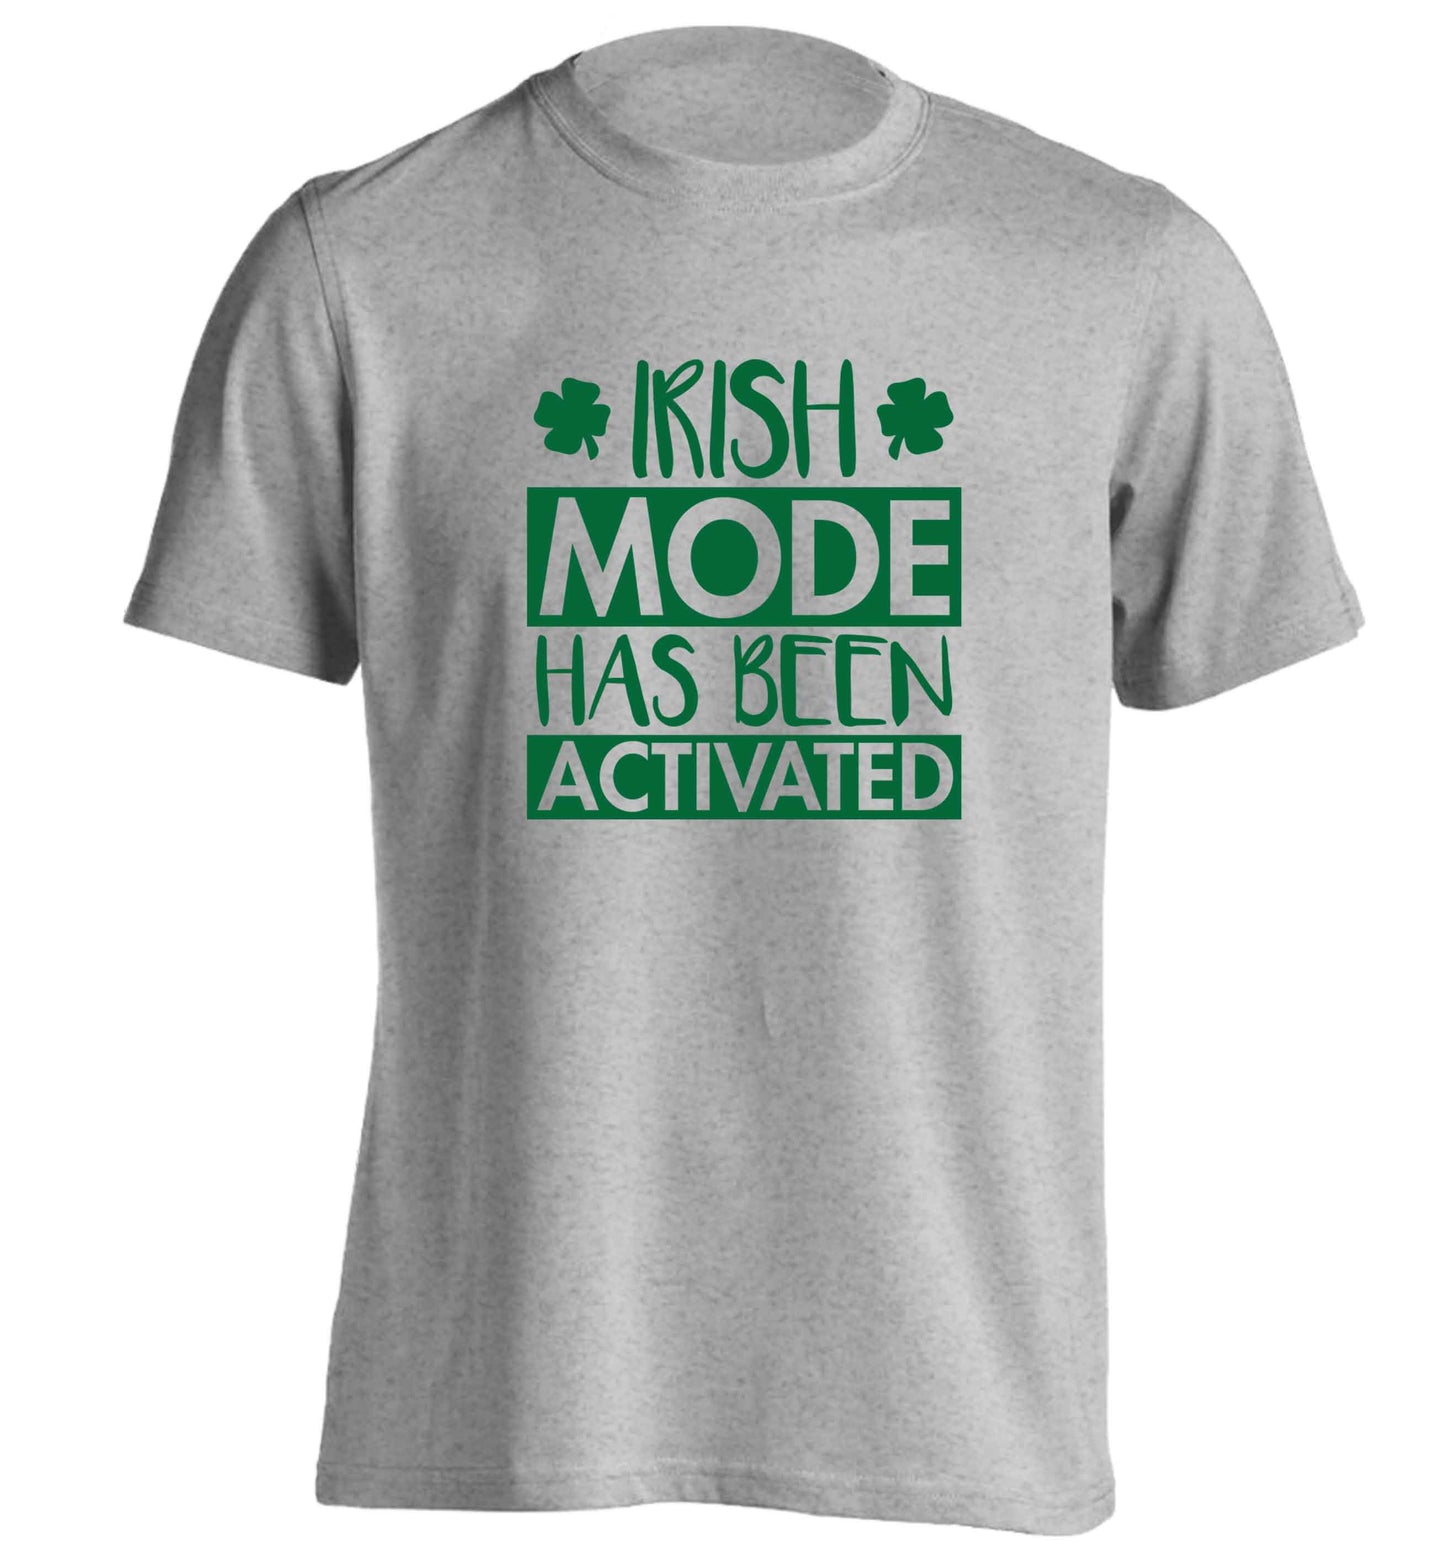 Irish mode has been activated adults unisex grey Tshirt 2XL